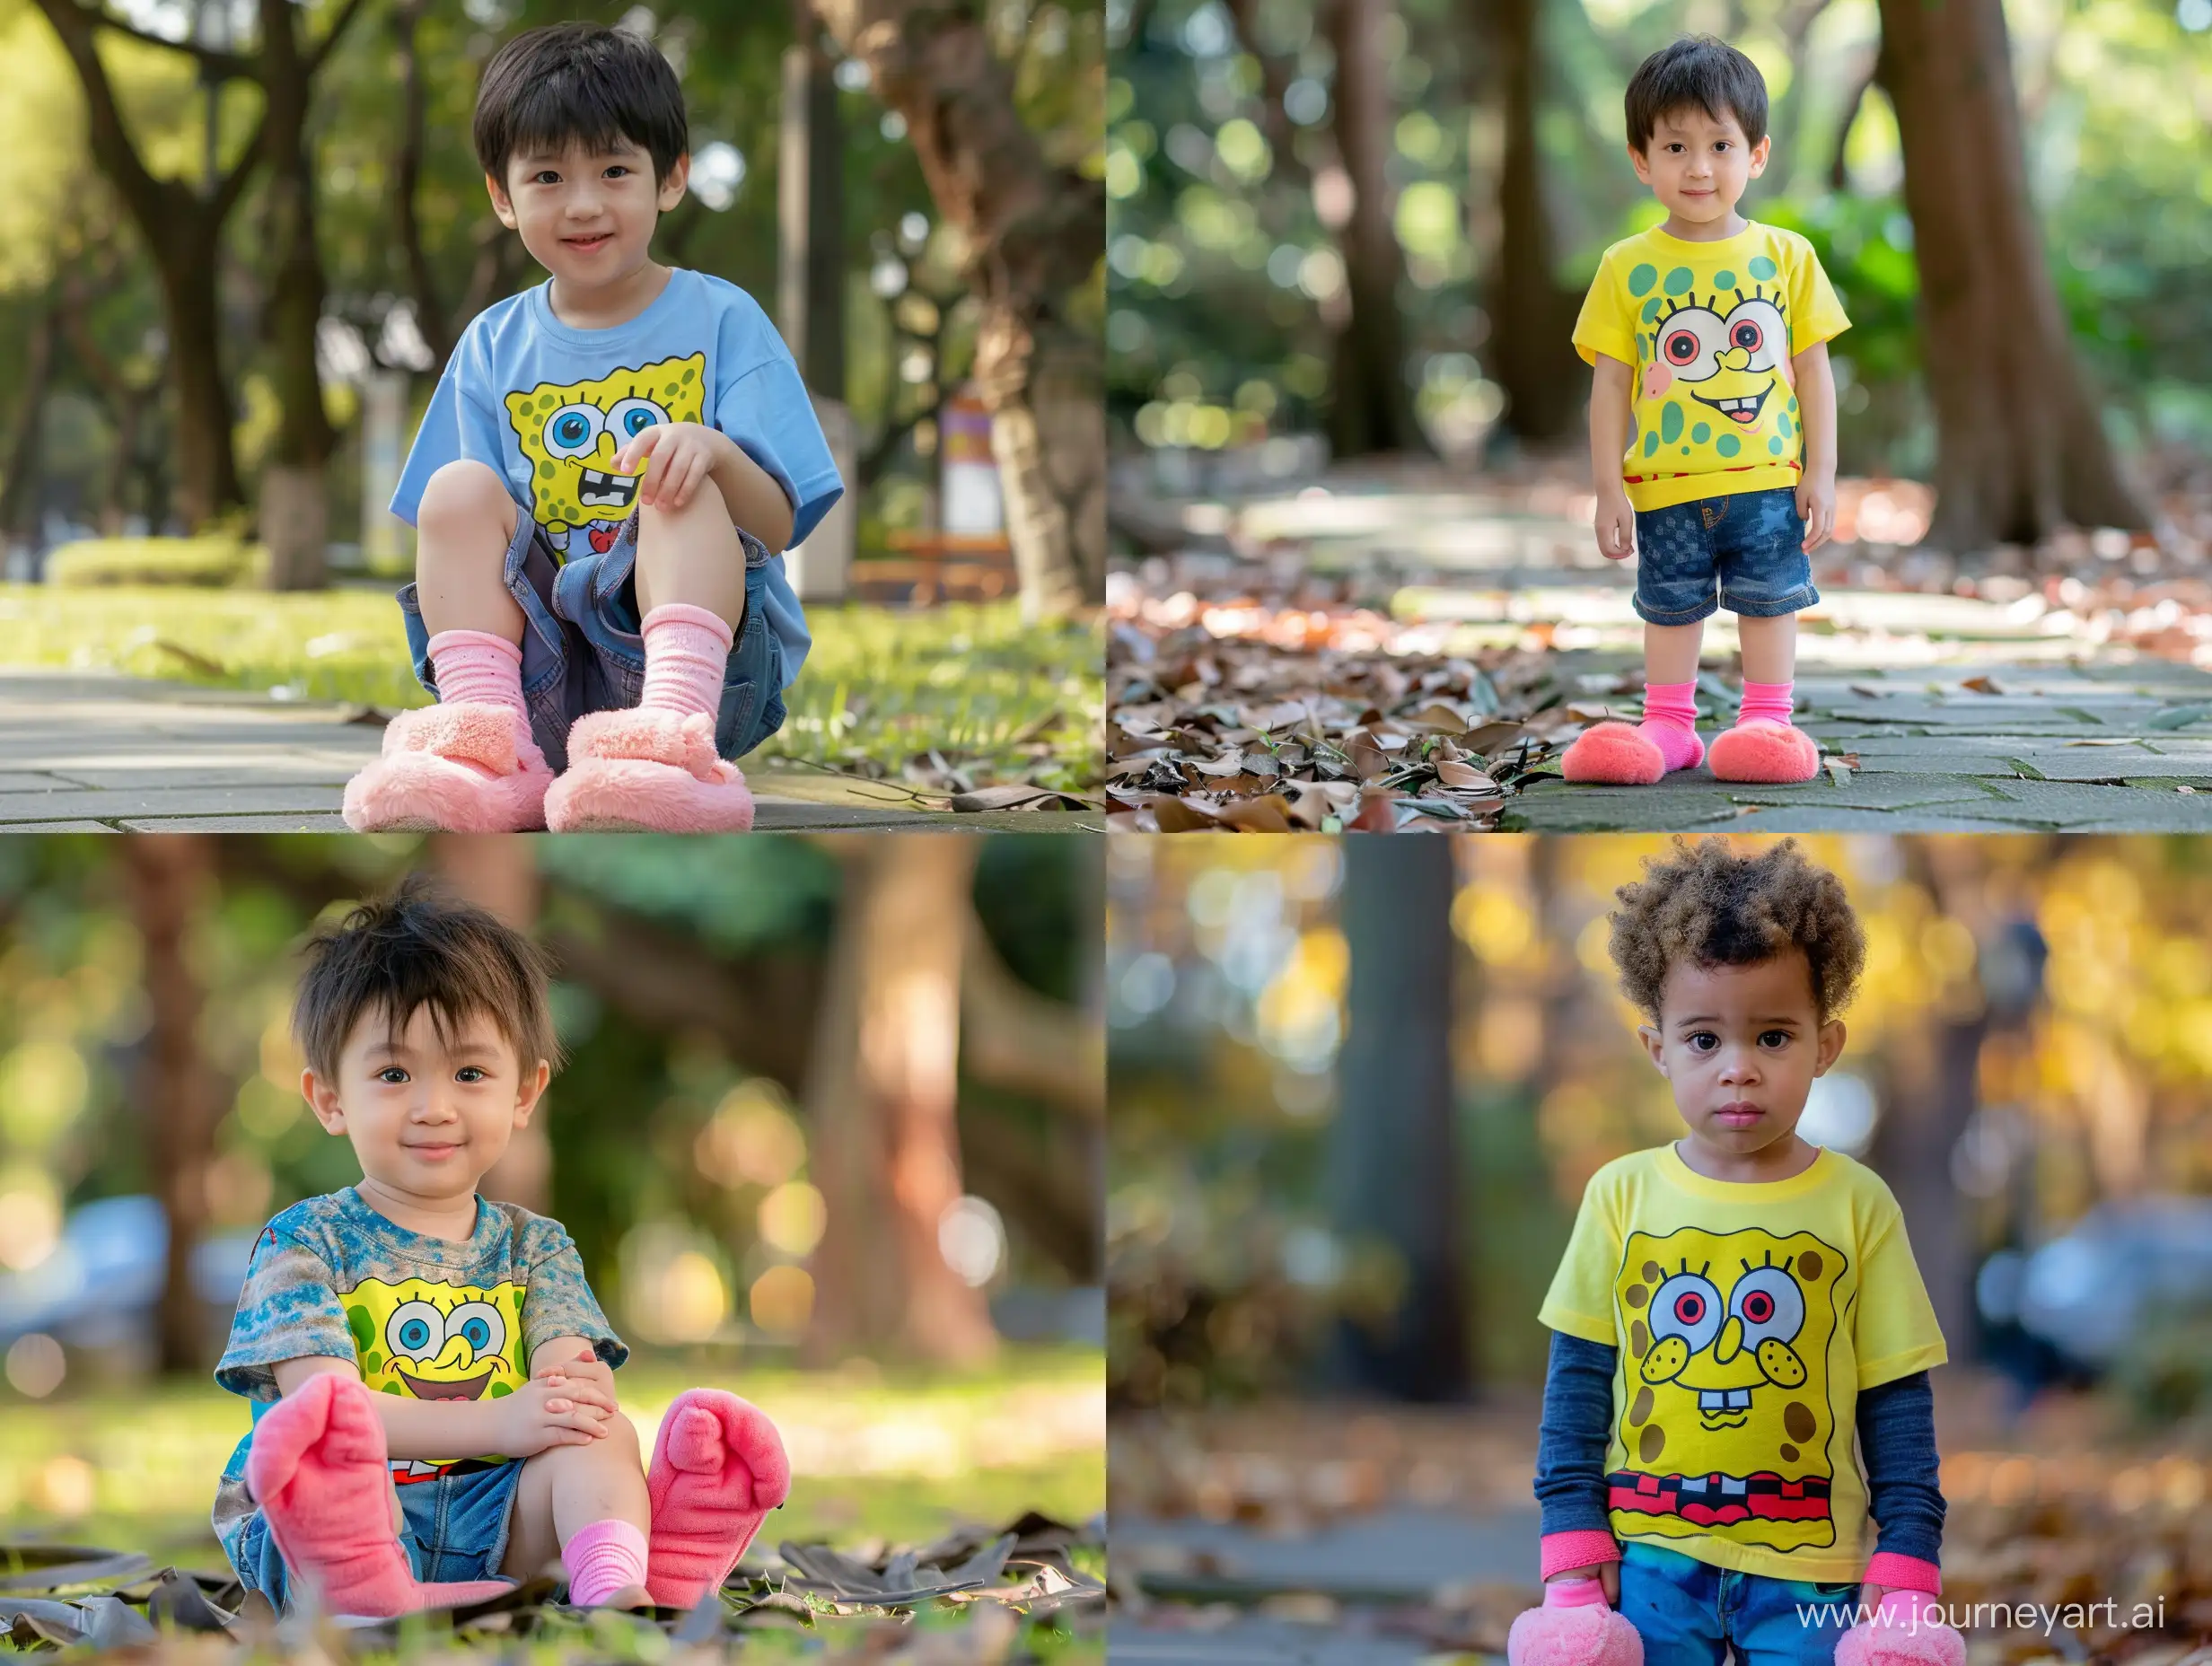 Adorable-Boy-in-SpongeBob-TShirt-Enjoying-Nature-at-the-Park